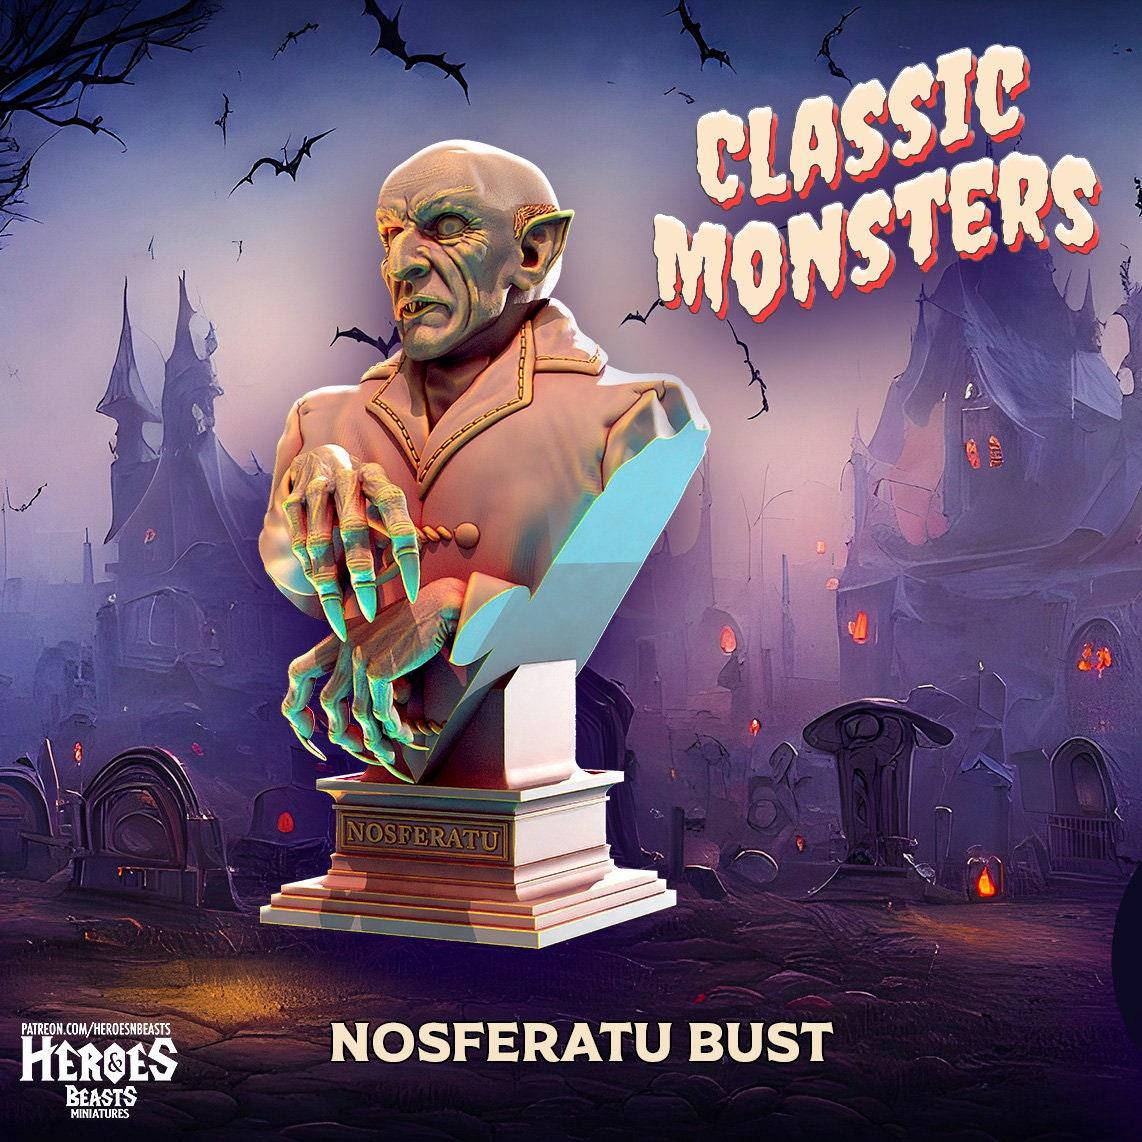 Nosferatu Miniature Bust Miniature | Classic Monsters | Resin Display DnD Miniature | Dungeons and Dragons, DnD 5e Feature Film Theatre - Plague Miniatures shop for DnD Miniatures